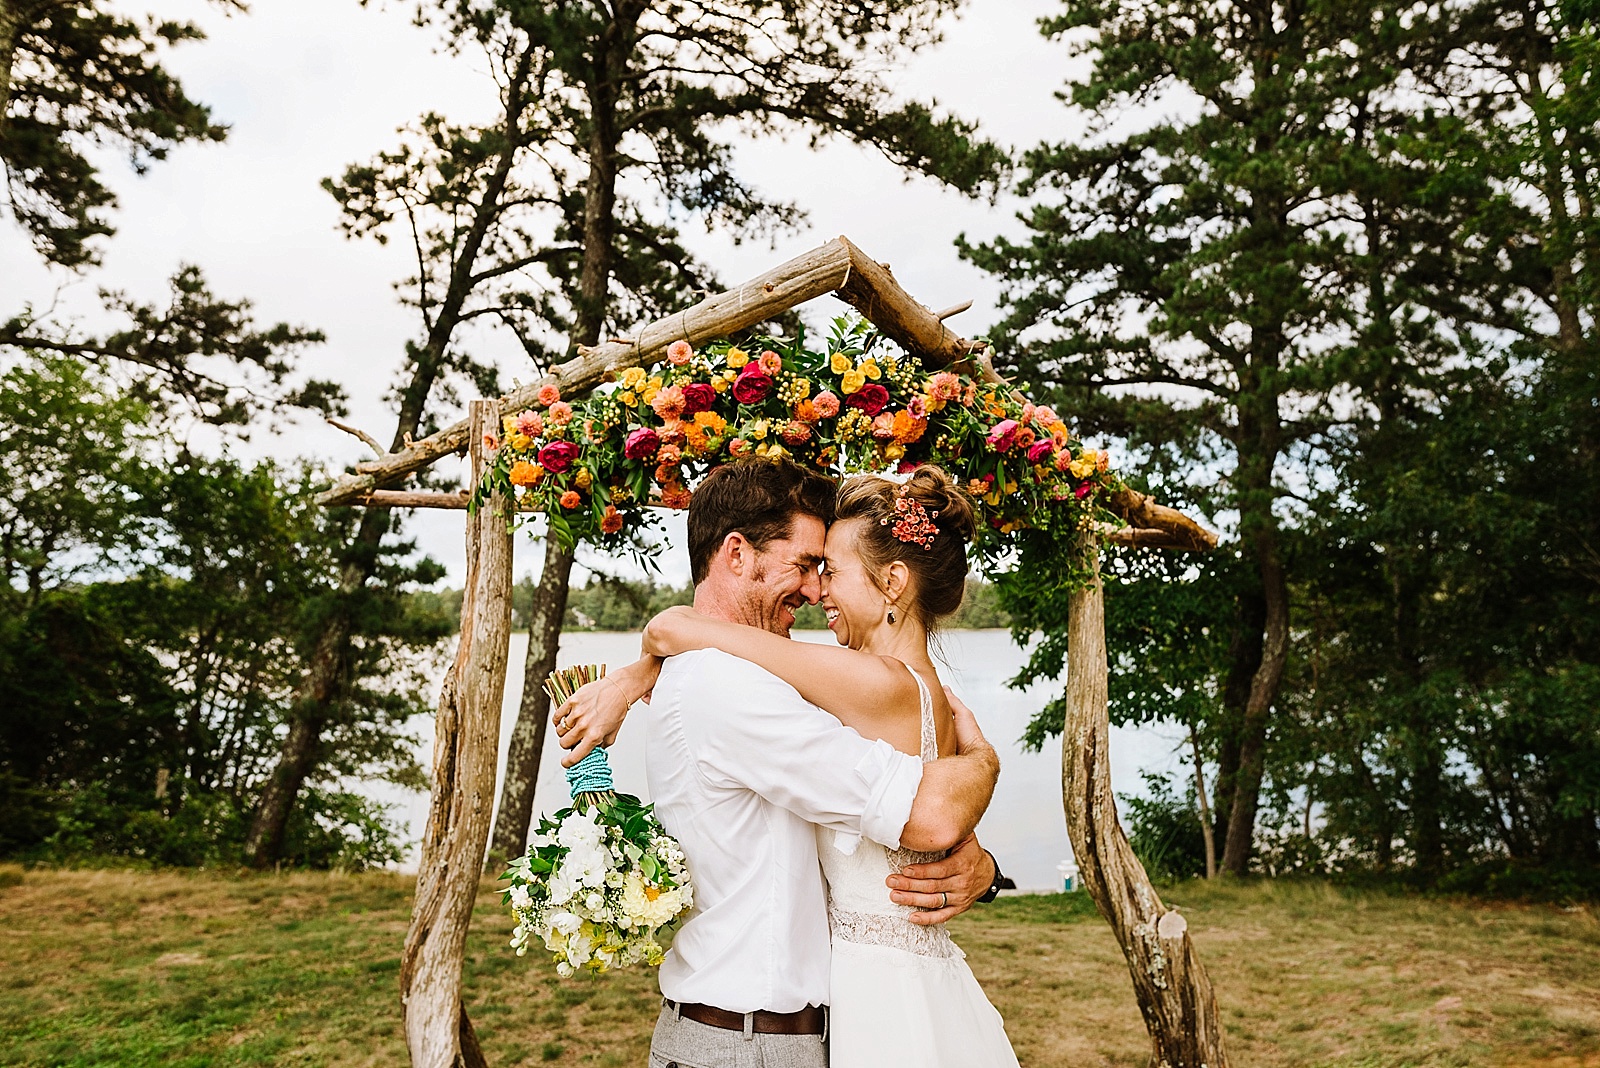 Southwestern Inspired Wedding in Marston Mills, Cape Cod by Boston Wedding Photographer Annmarie Swift